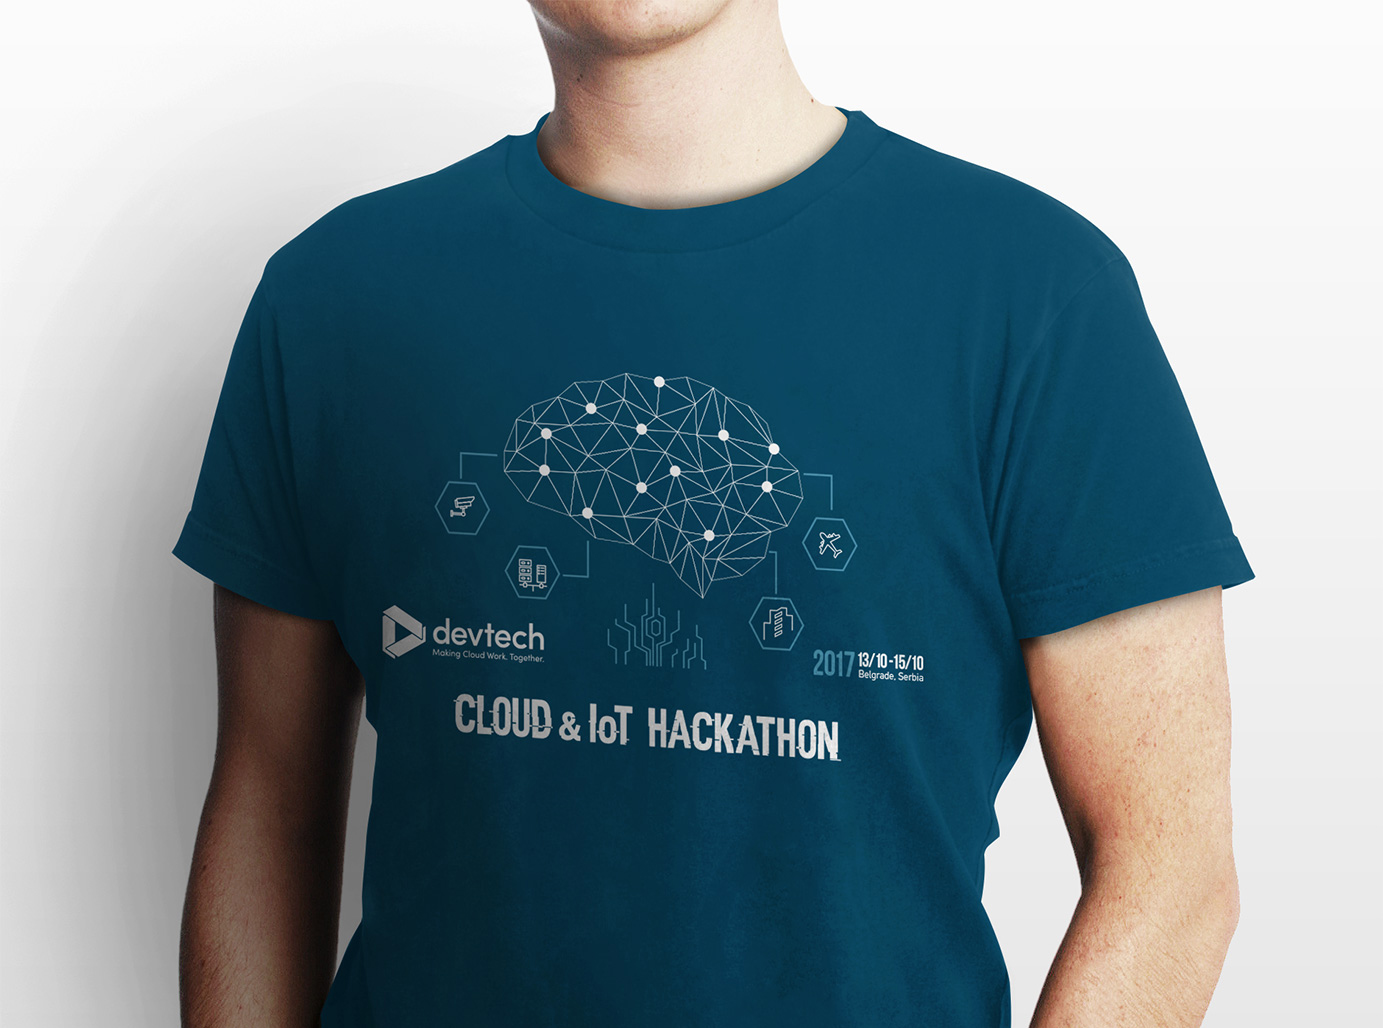 Hackathon T-shirt print design by Mindmedias